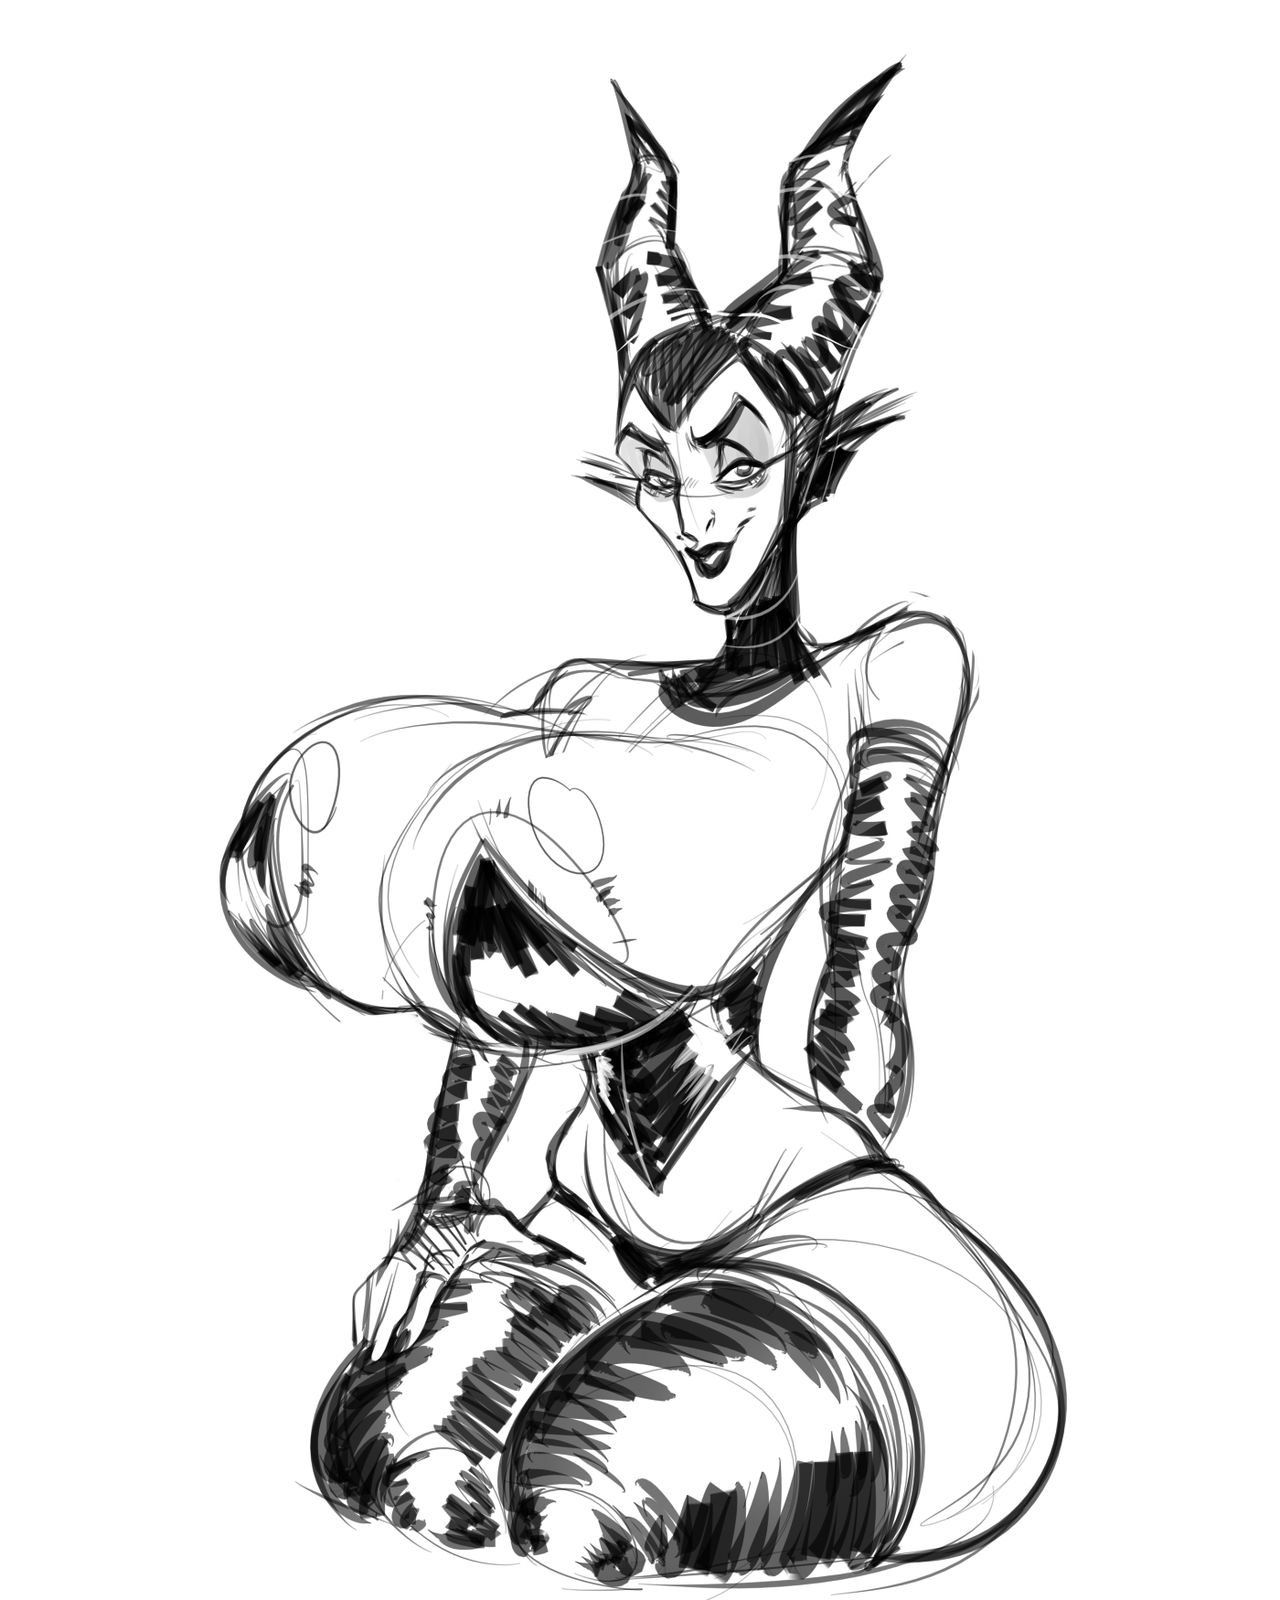 goodbadlewd: Maleficent sketch my queen~ &lt; |D”‘‘‘‘